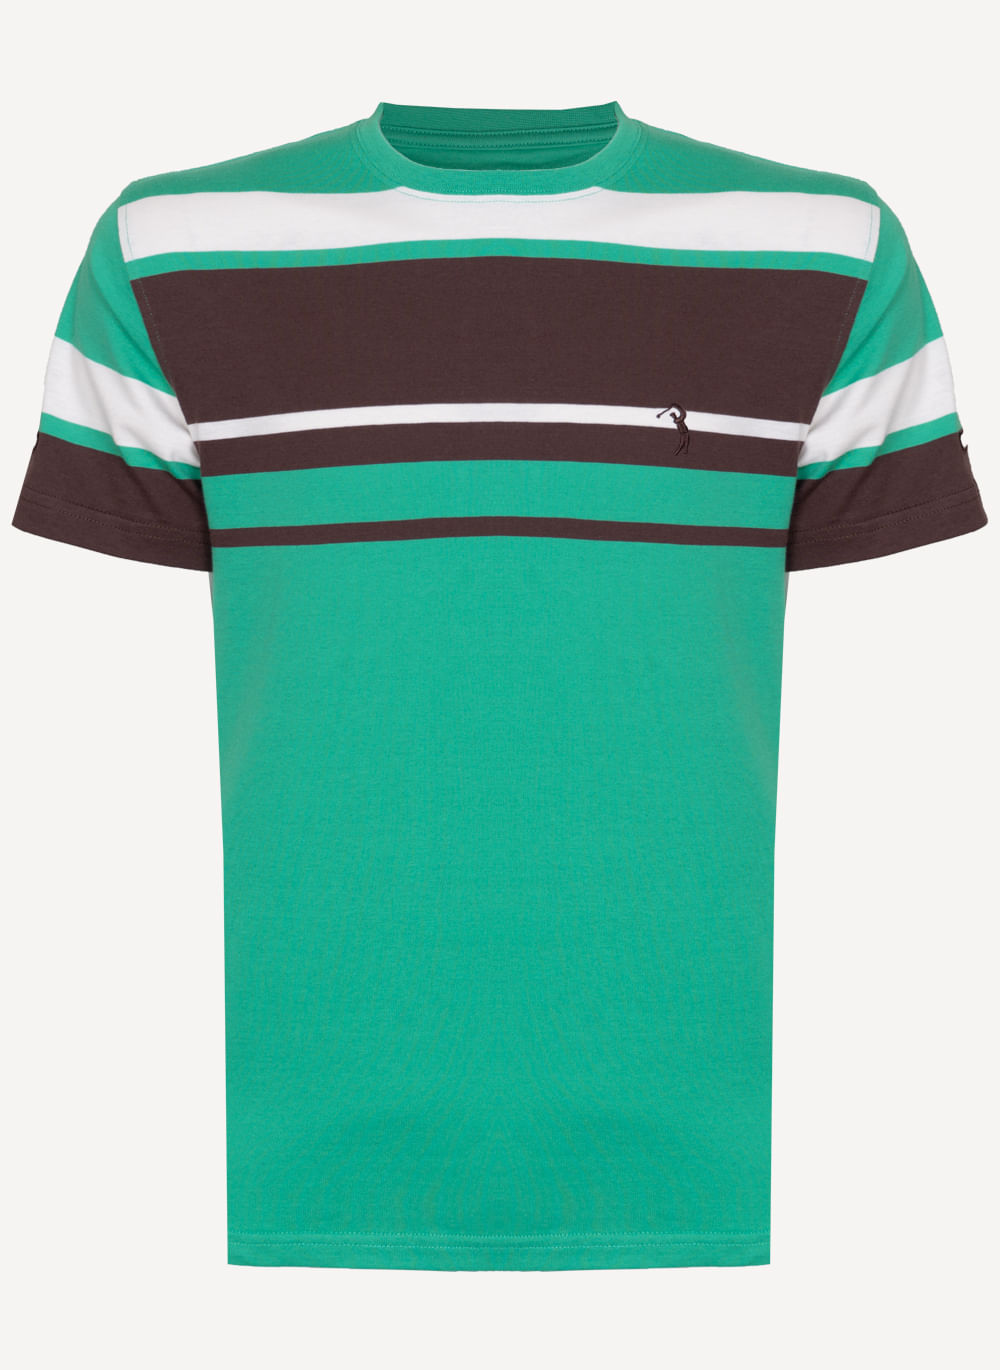 Camiseta-Aleatory-Listrada-Talent-Verde-Verde-P